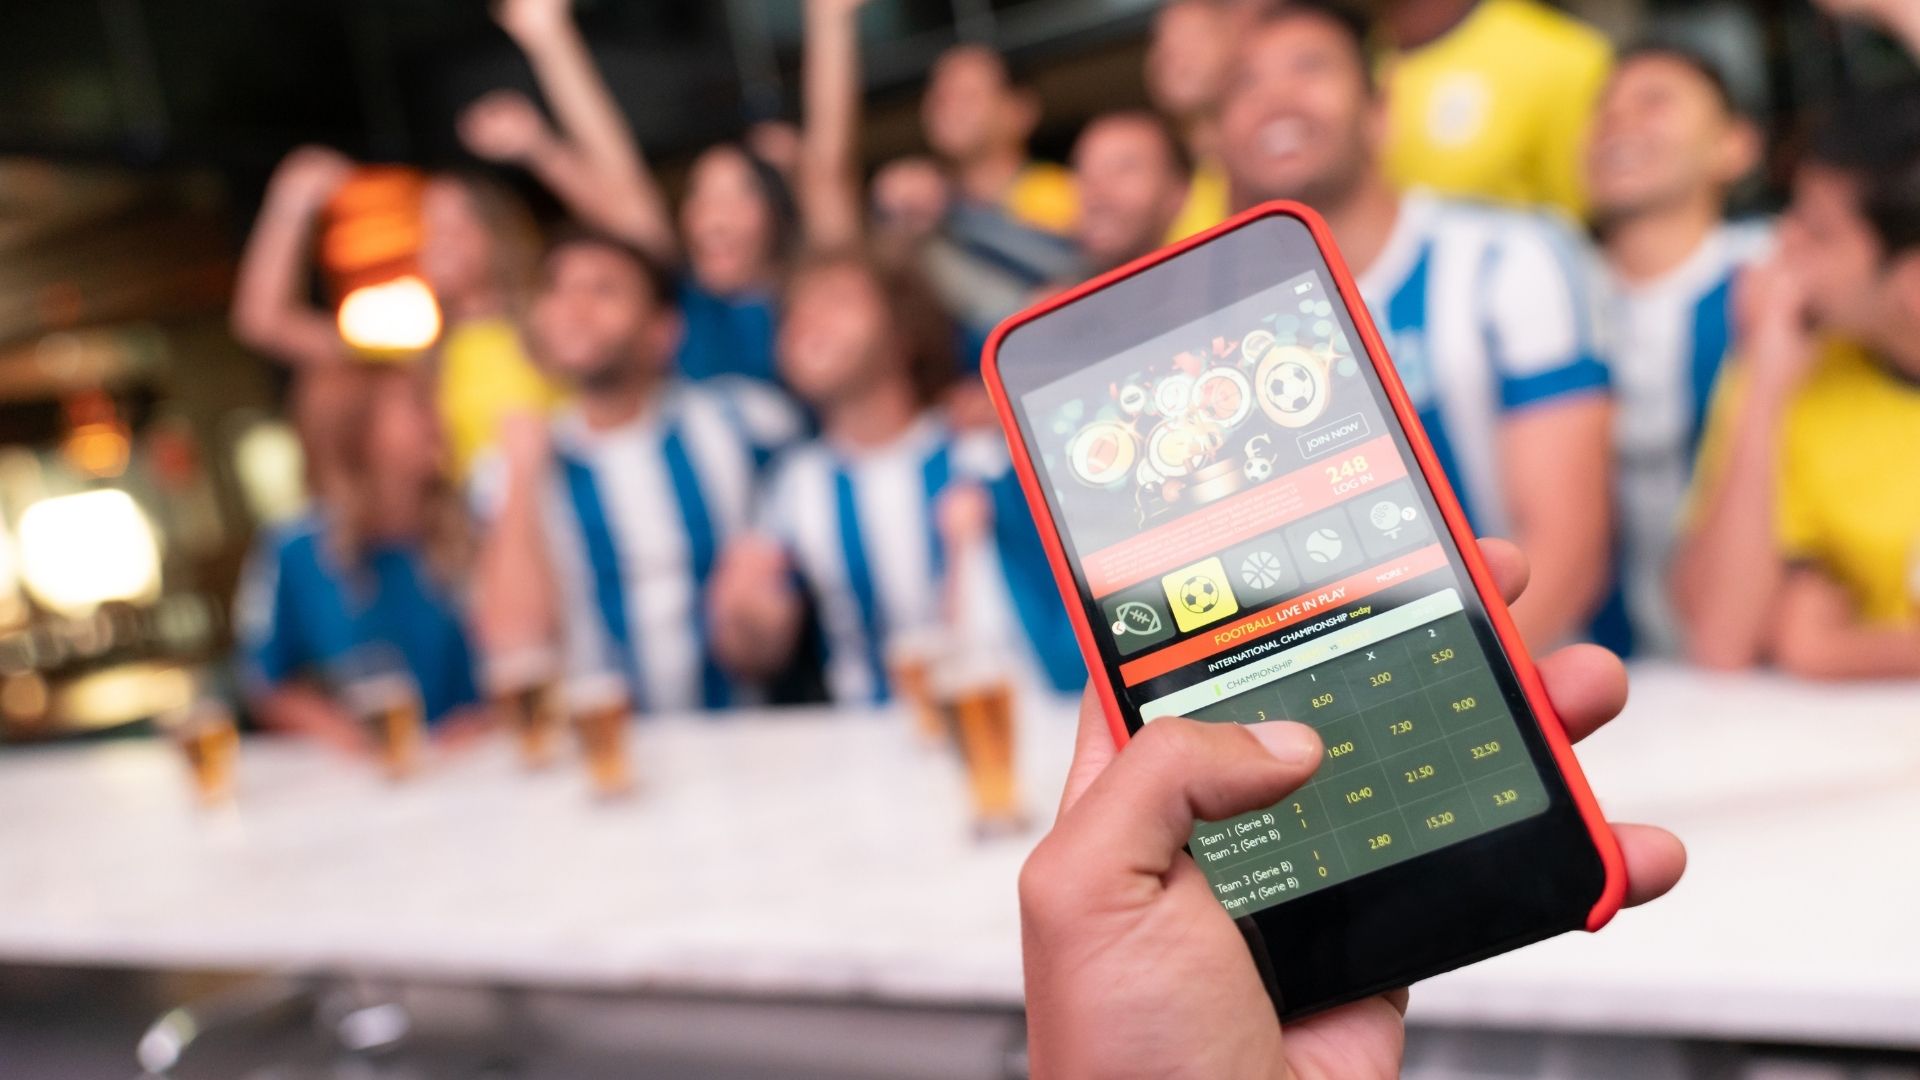 mobile betting app